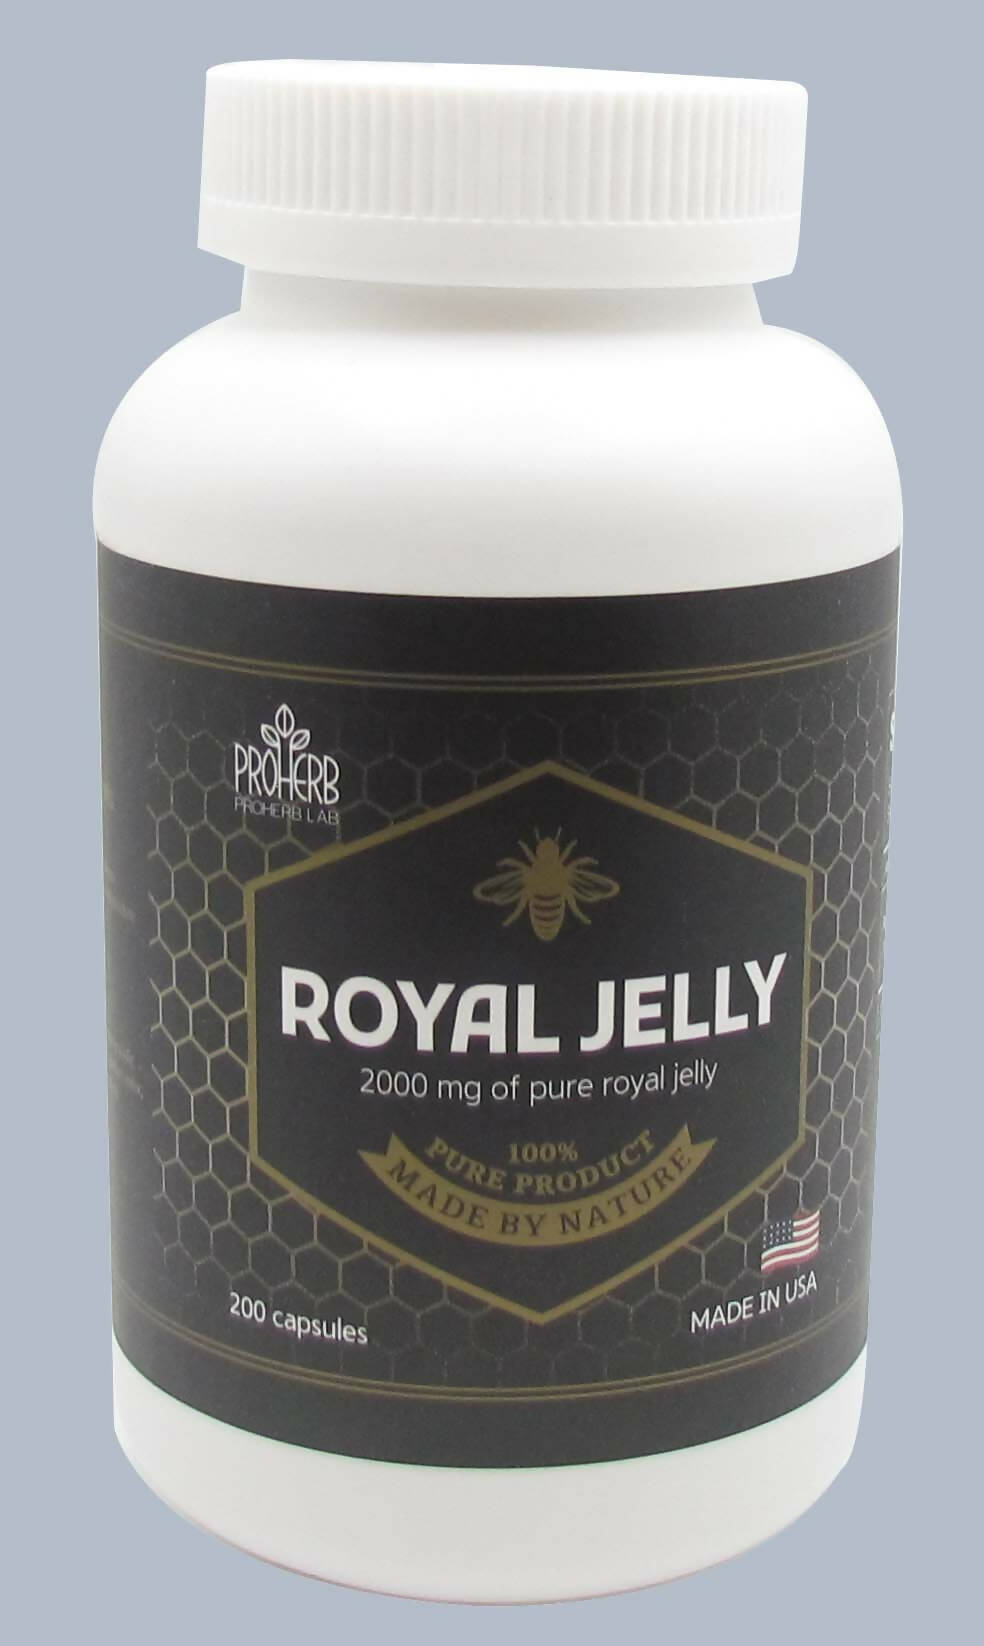 ROYAL JELLY 2000mg pure royal jelly